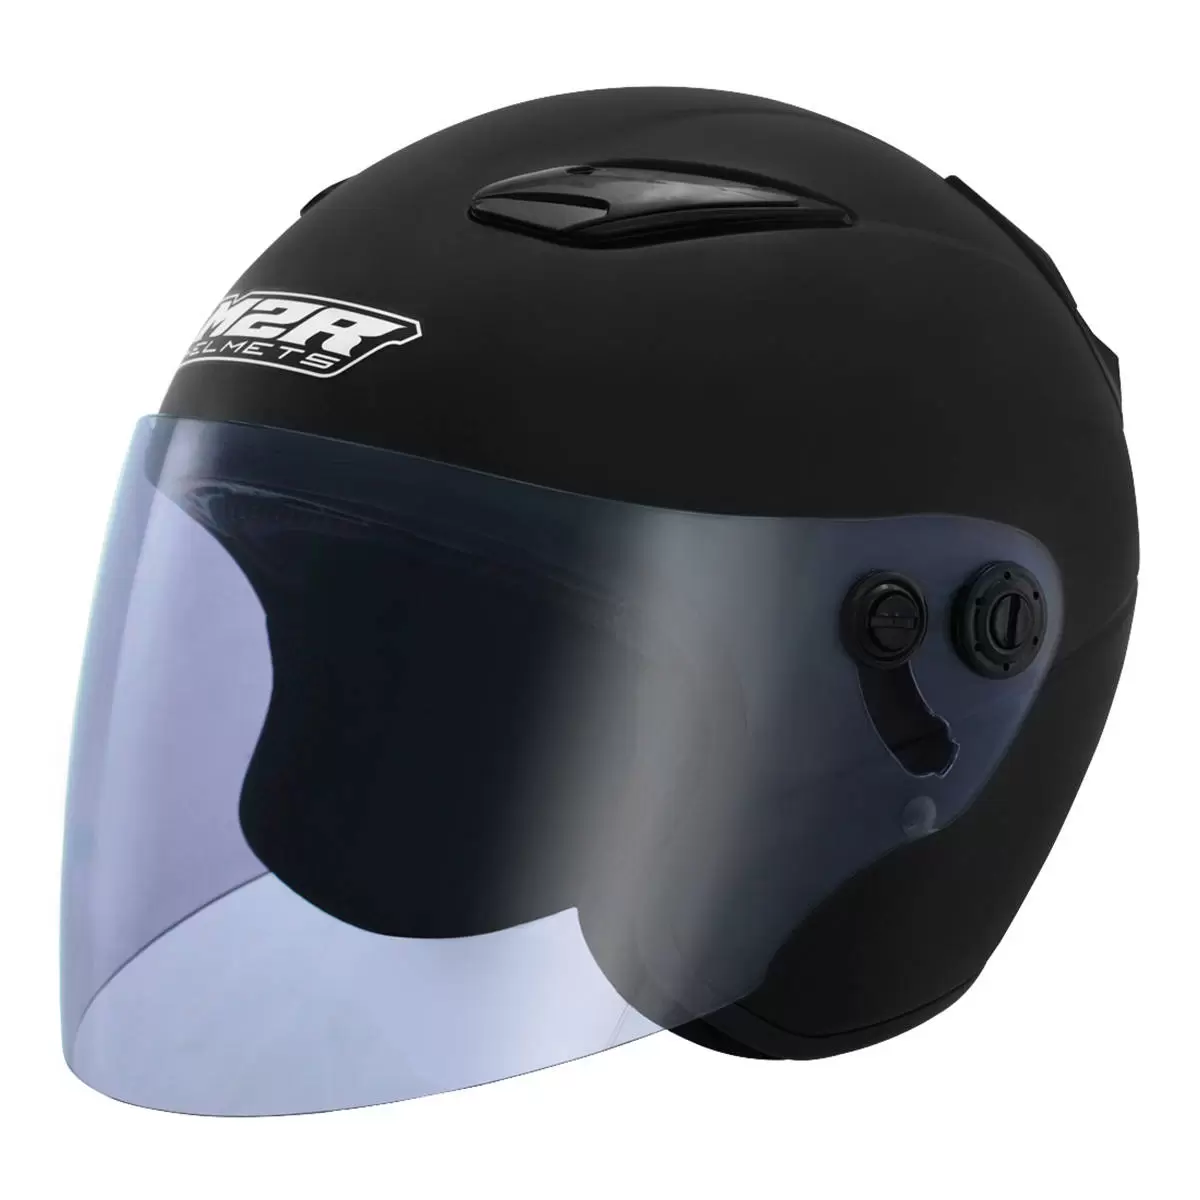 M2R 3/4罩安全帽 騎乘機車用防護頭盔 M-700 消光黑 XL